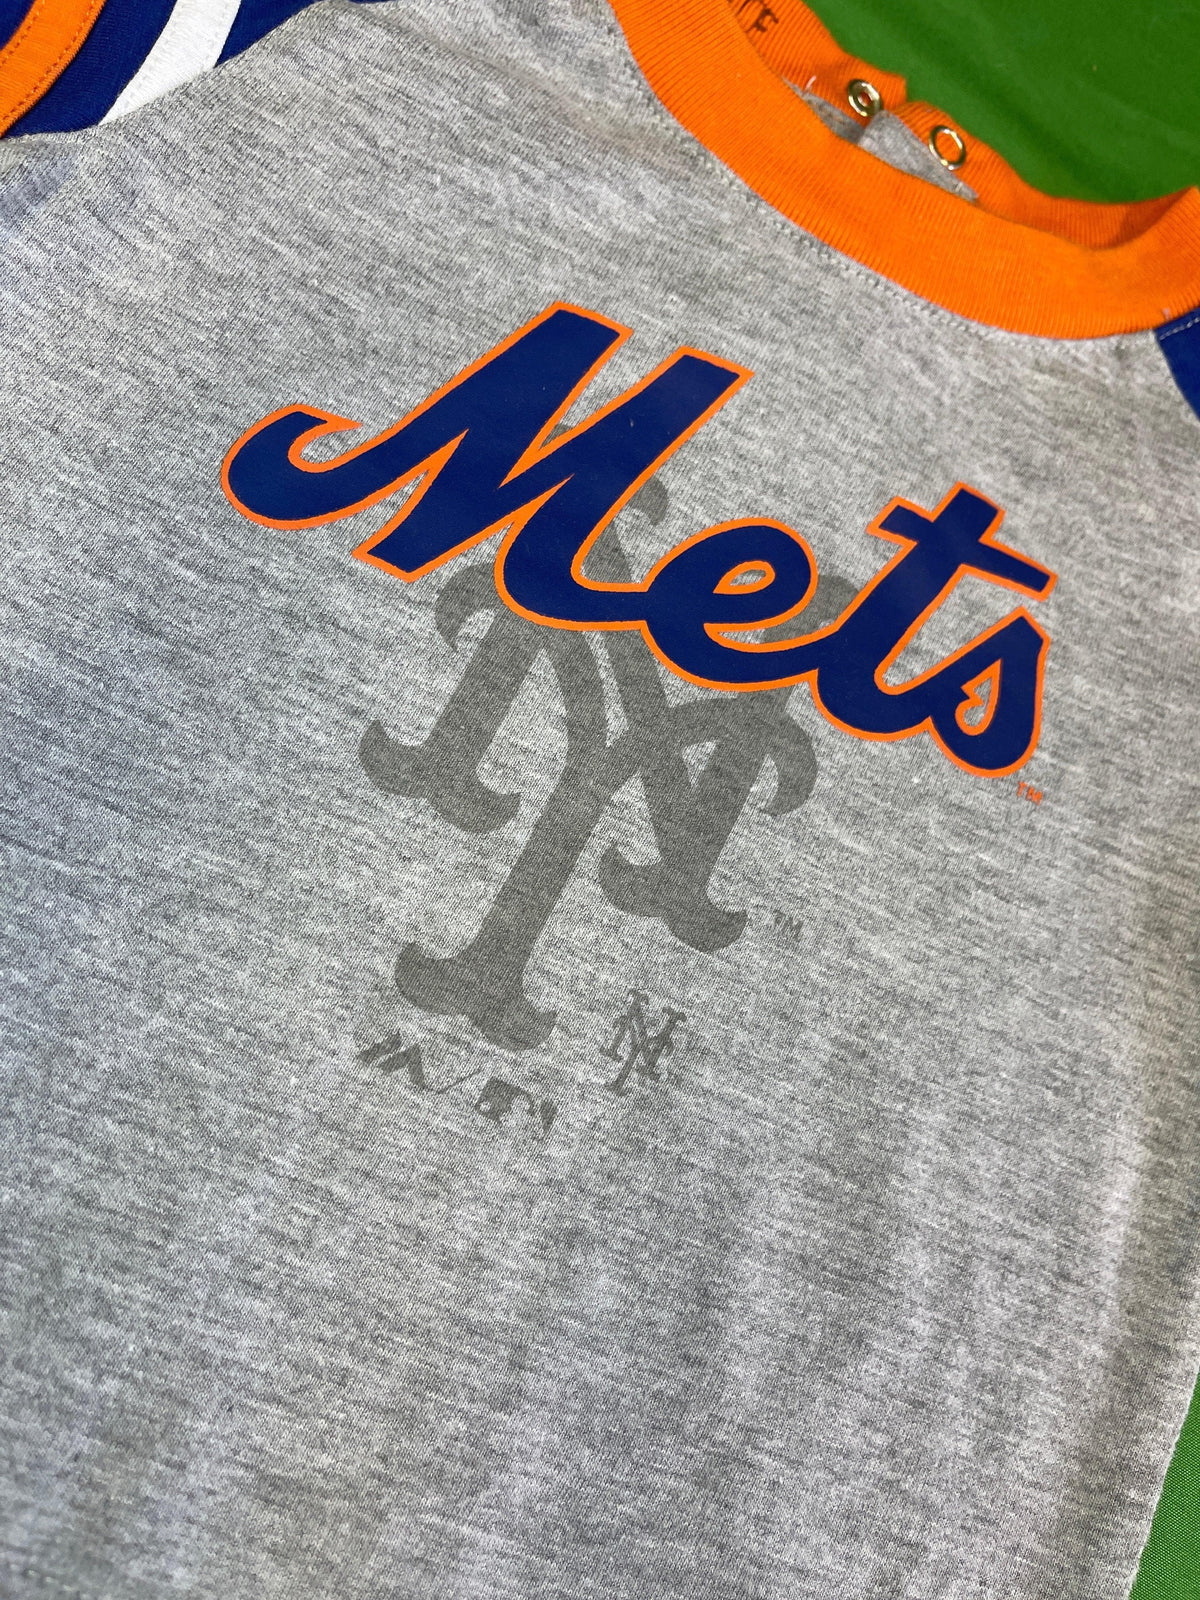 MLB New York Mets Grey Colourblock One-piece Bodysuit 24 months